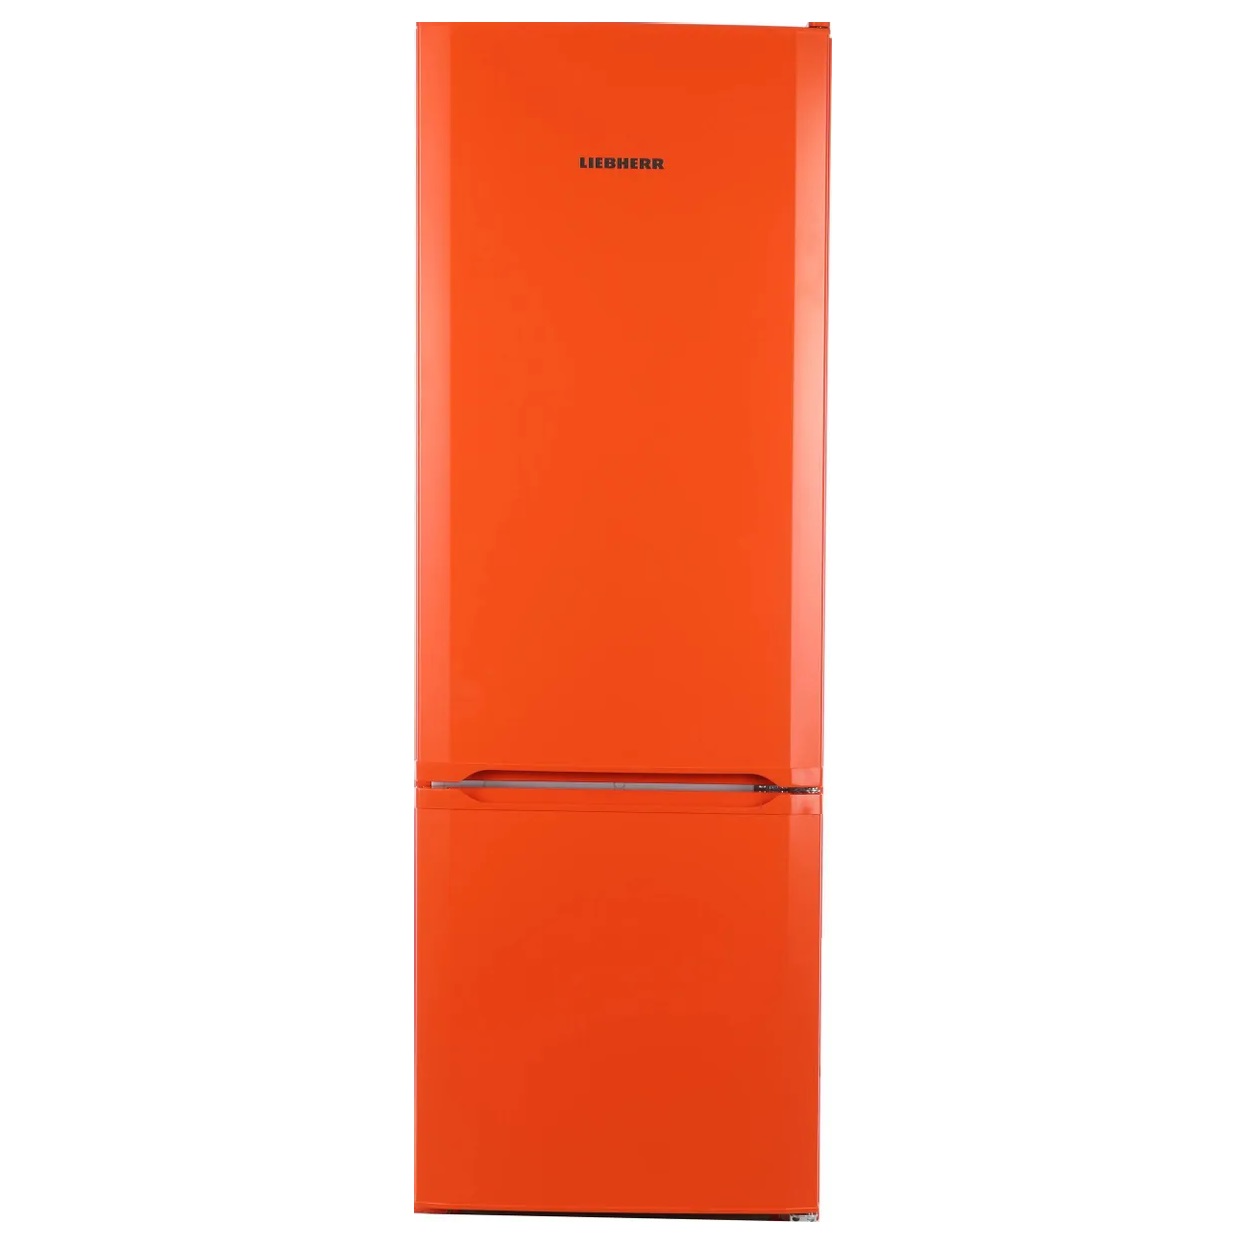 Холодильник LIEBHERR CUNO 2831-22 001 оранжевый холодильник liebherr cukw 2831 22 001 зеленый